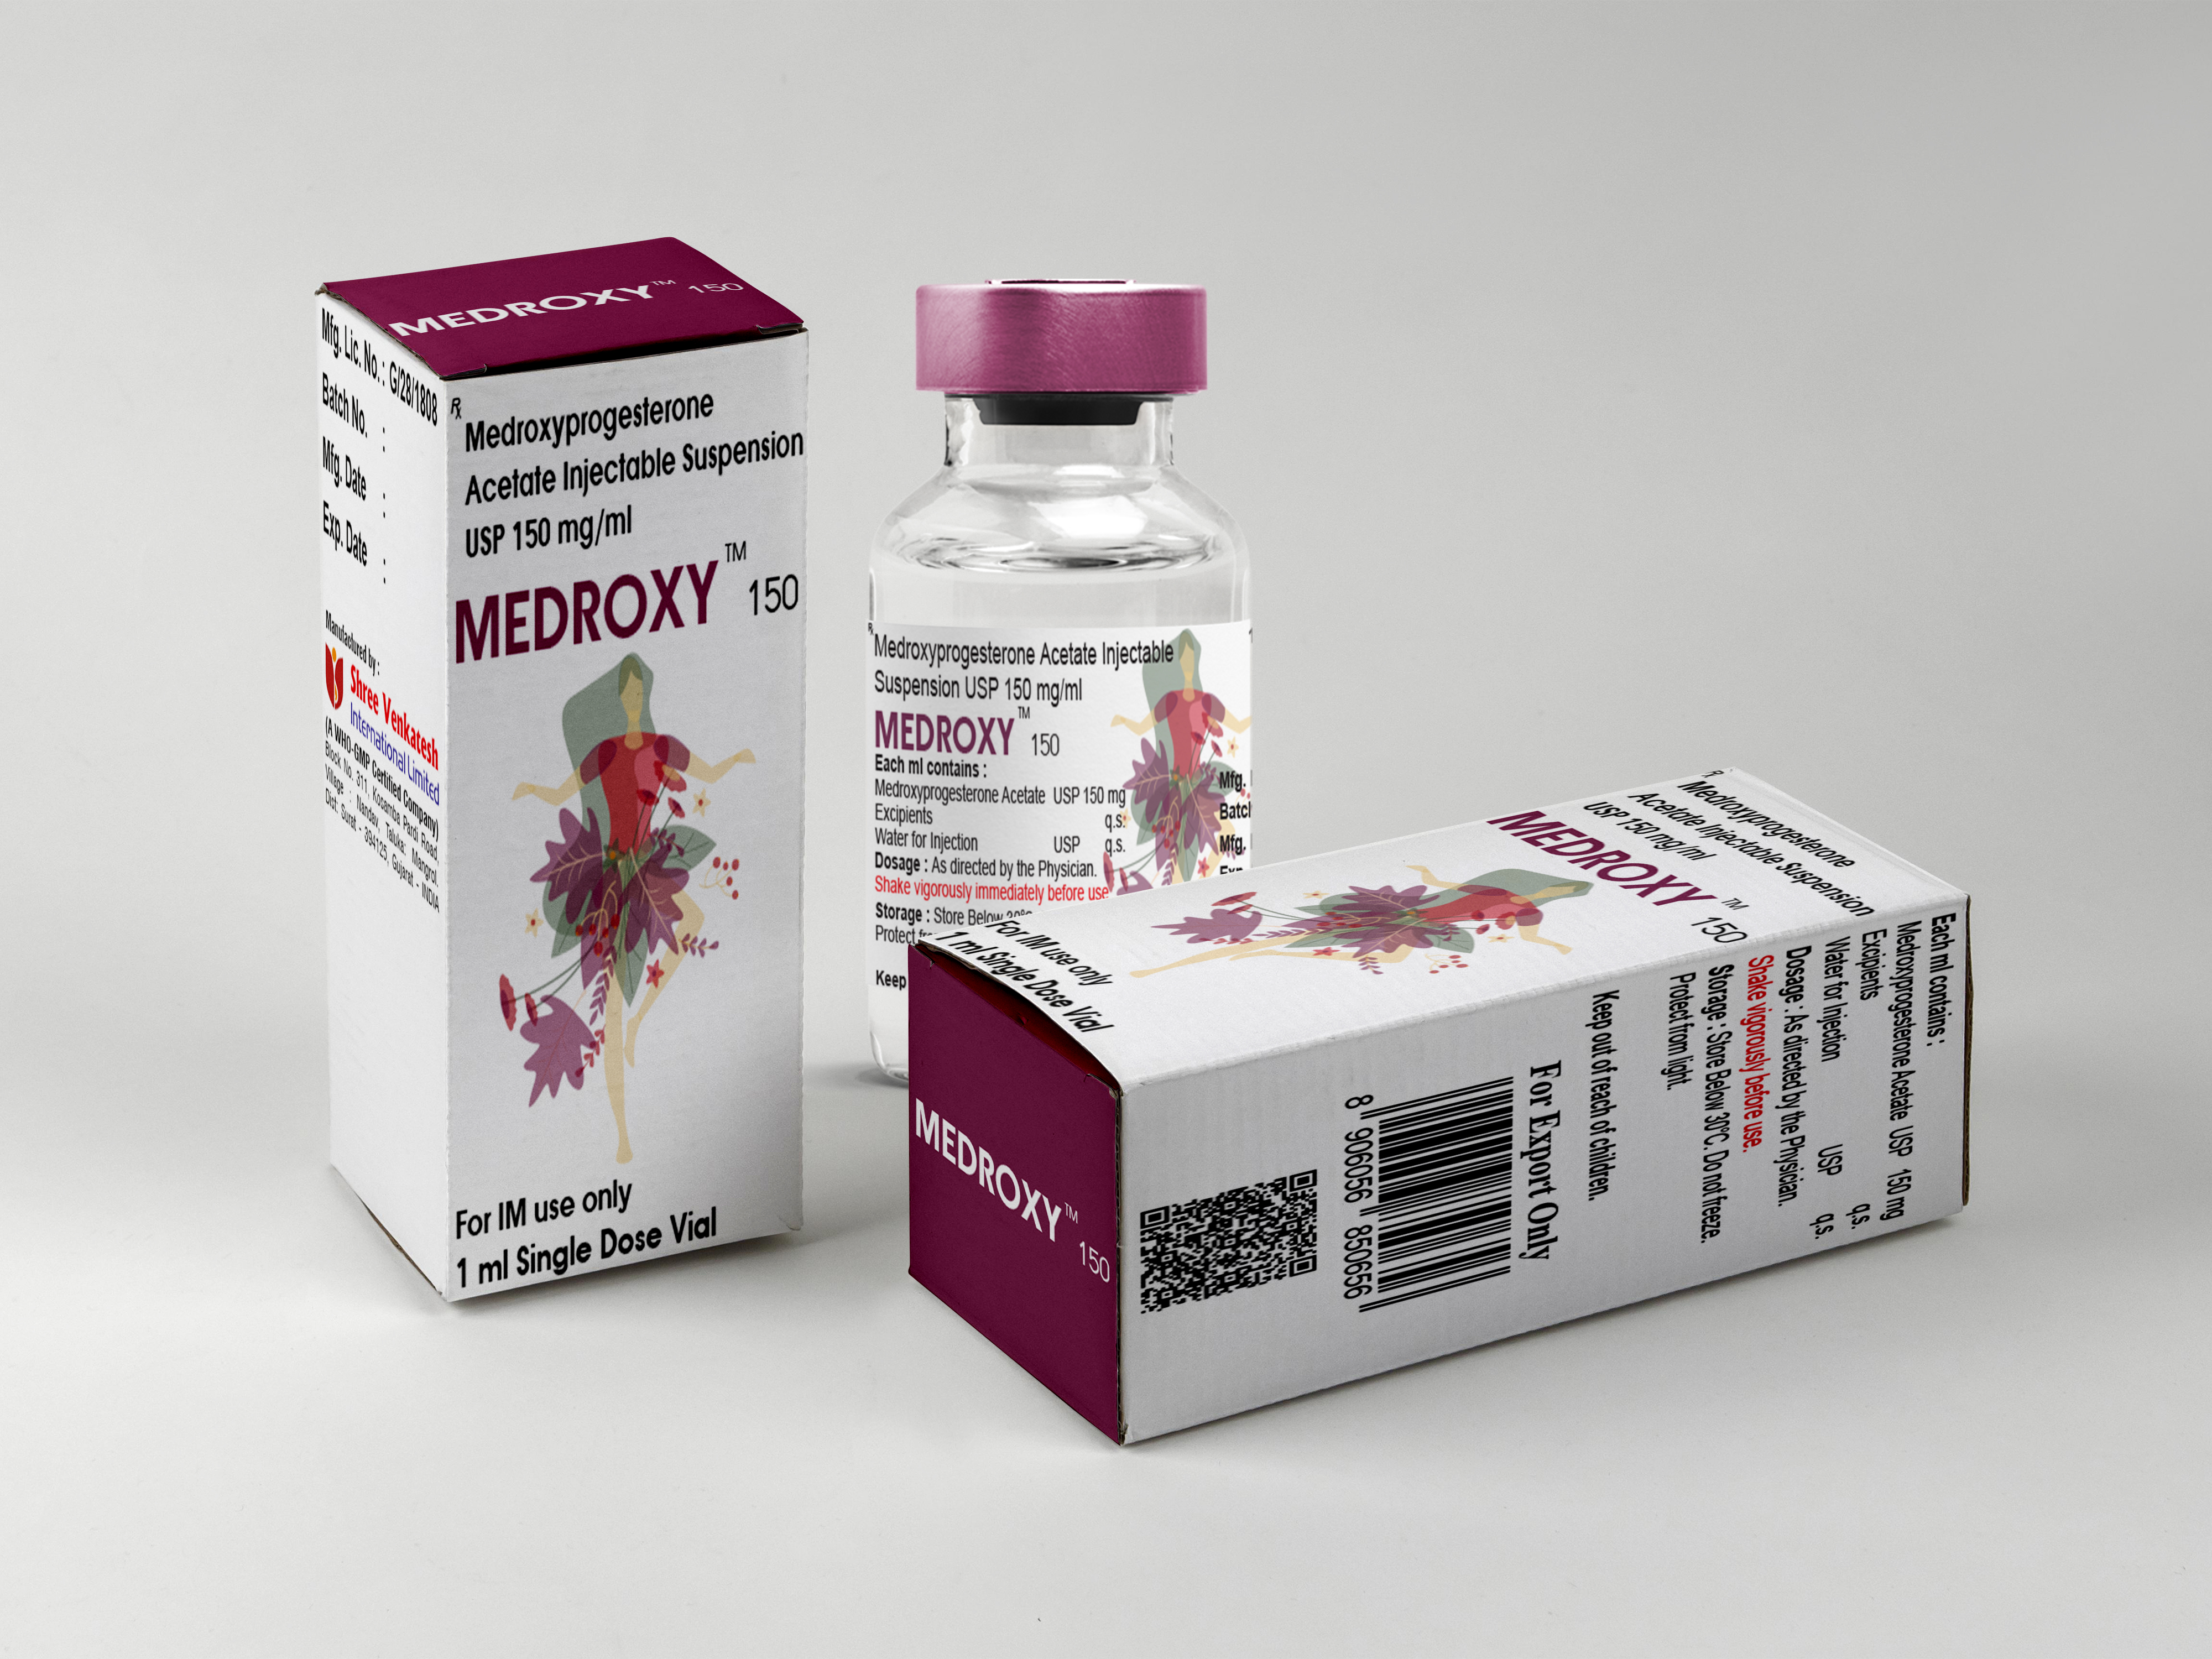 Medroxyprogesterone Acetate Injectable Suspension USP 150mg/ml